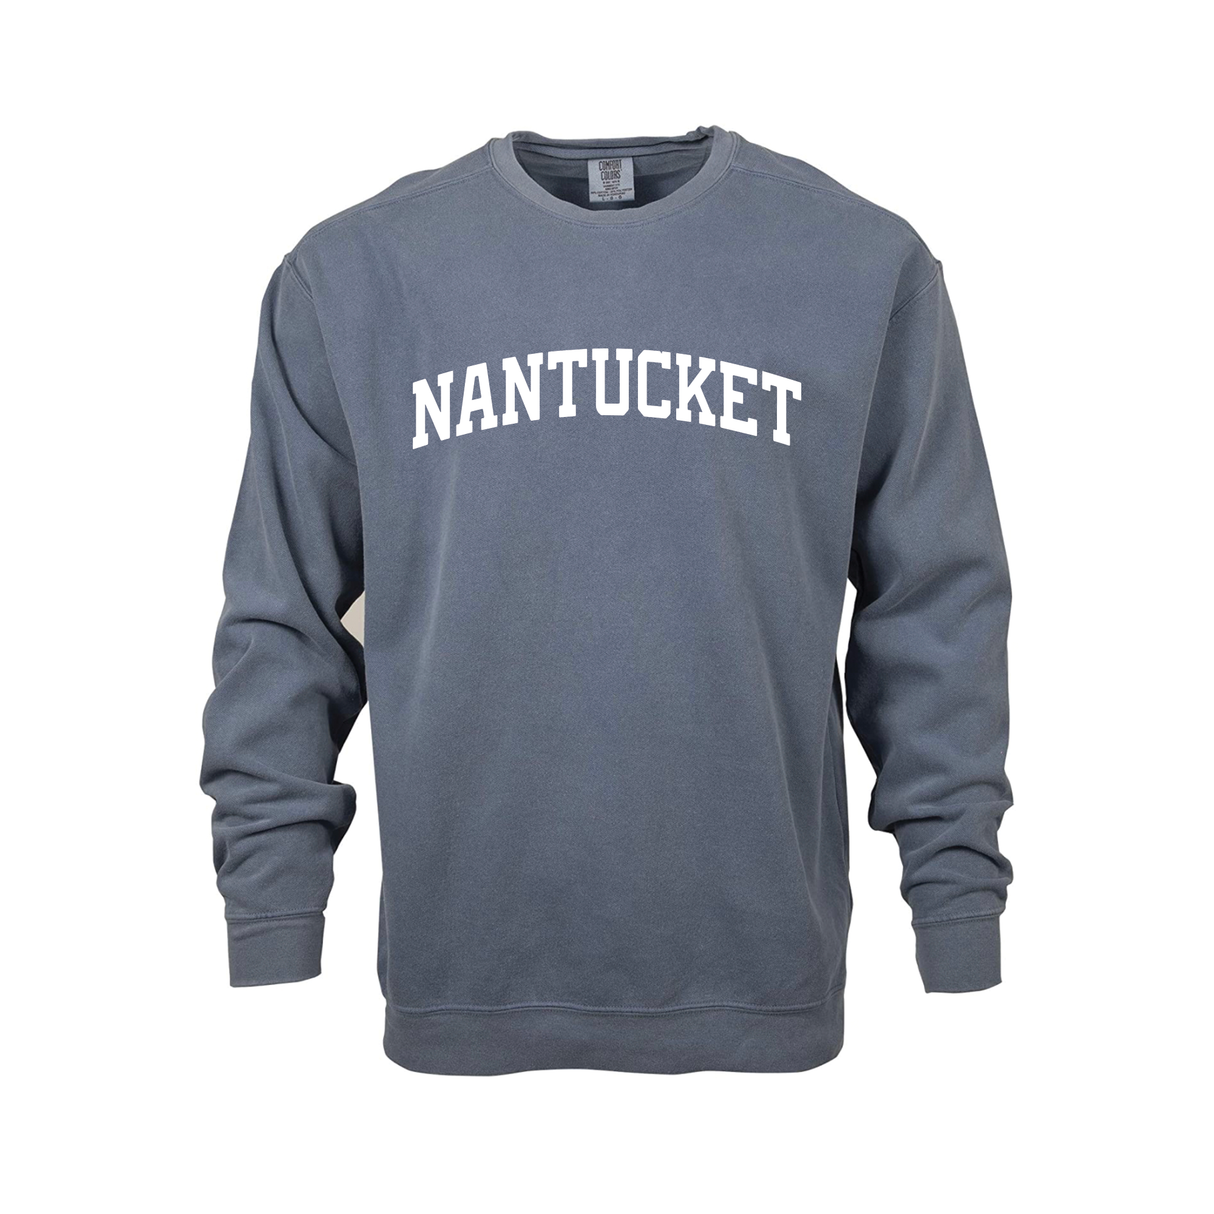 Nantucket Sweatshirt (Bluefish Blue)